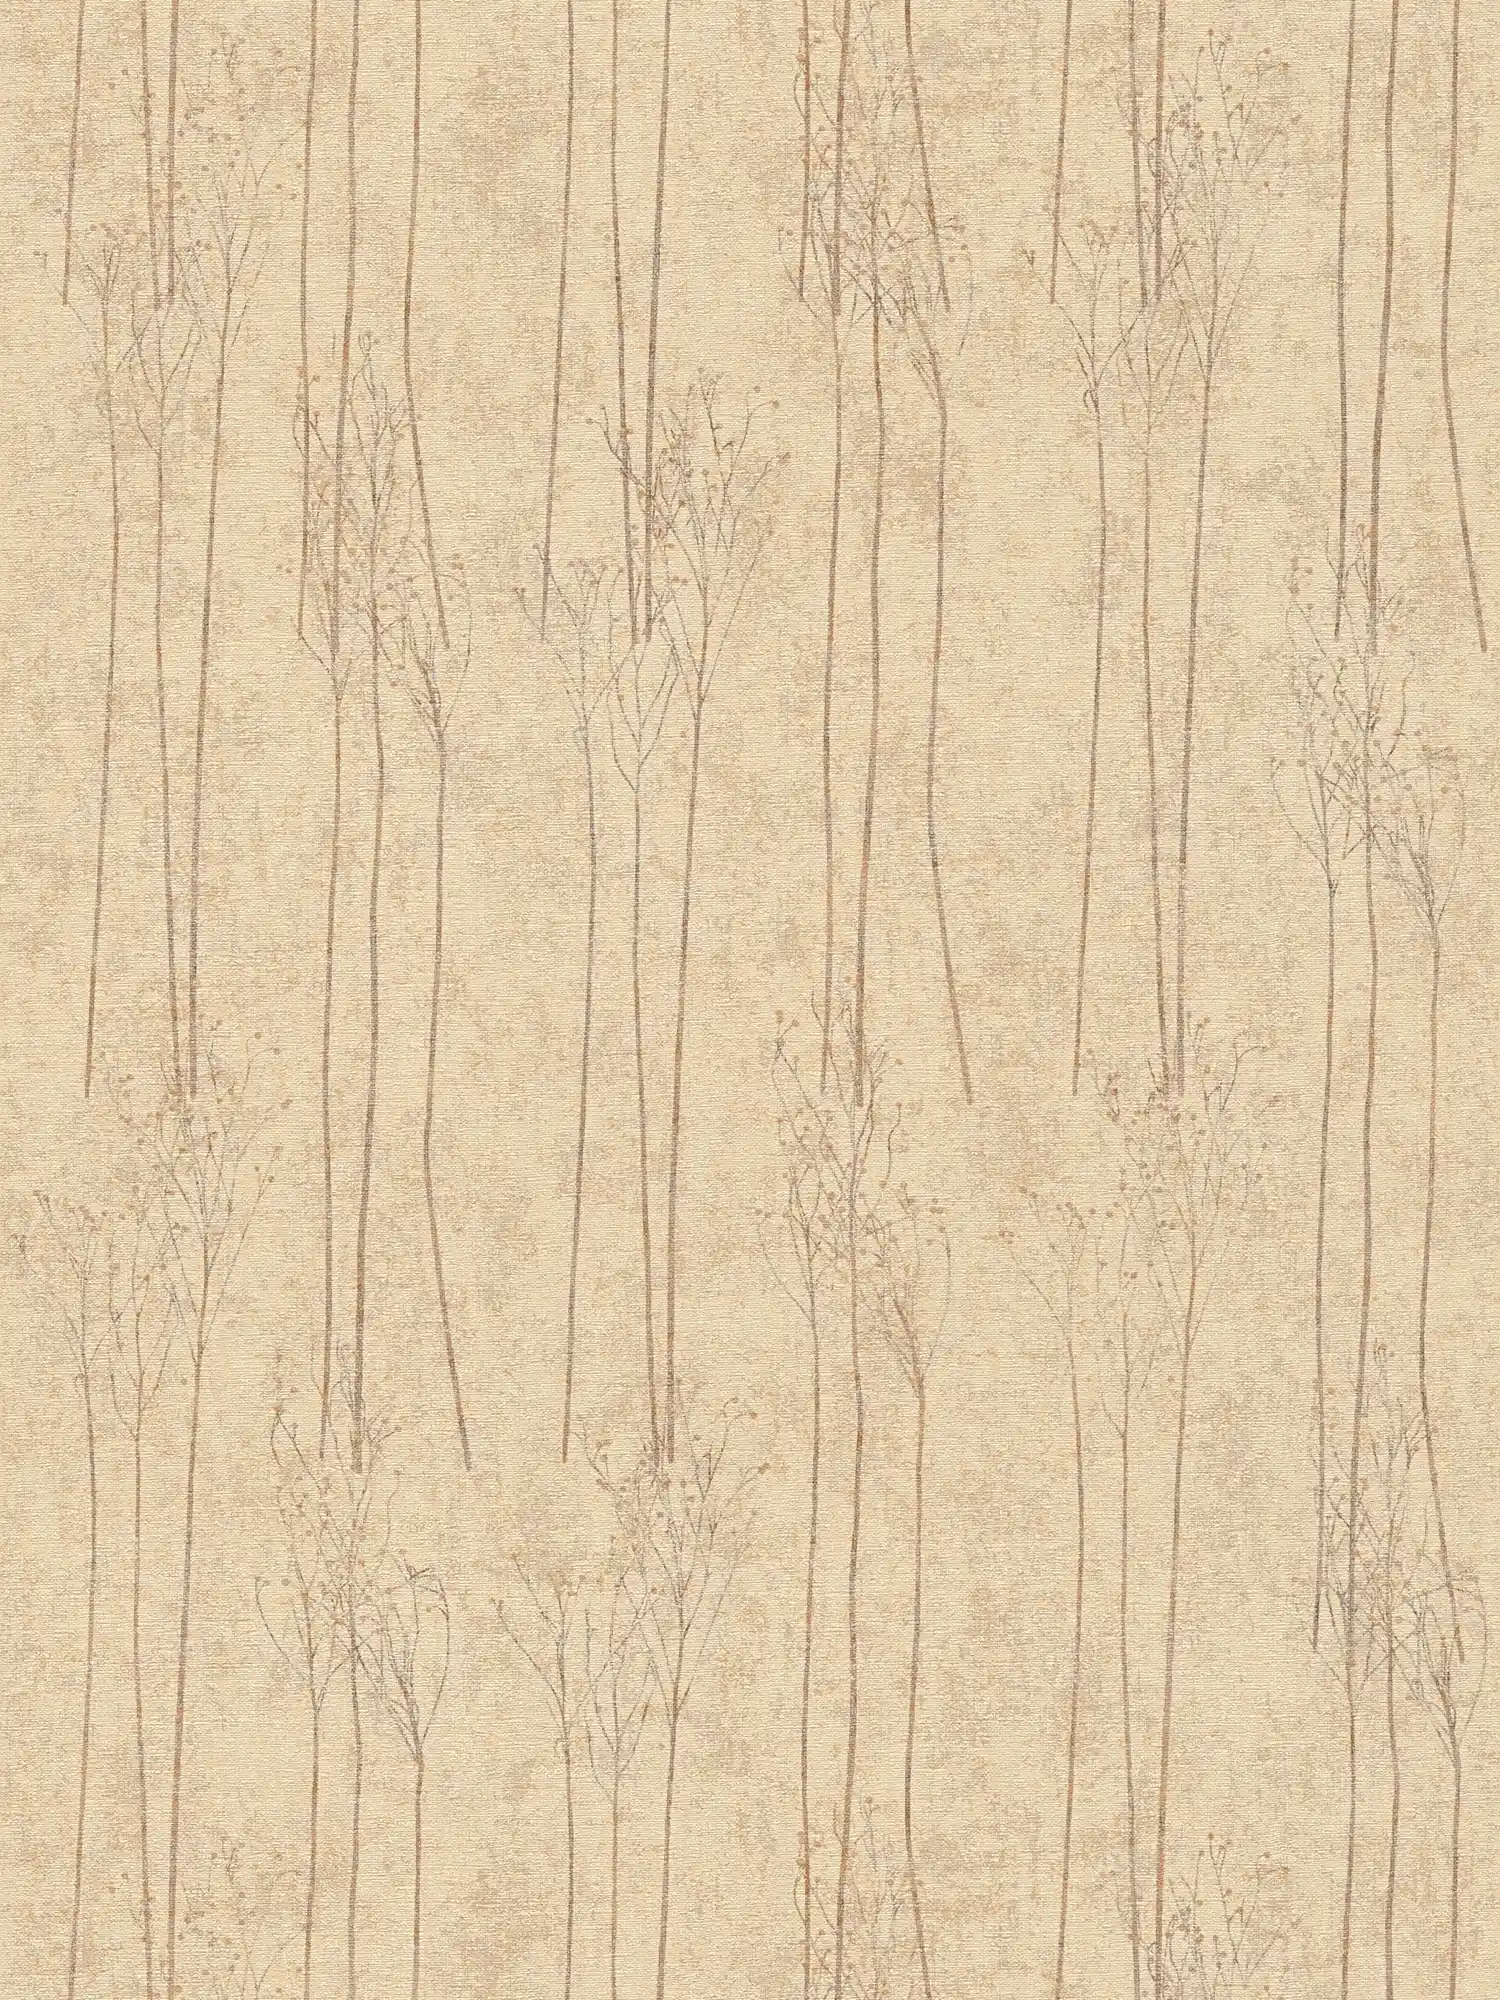 Scandinavian style wallpaper nature pattern - beige
